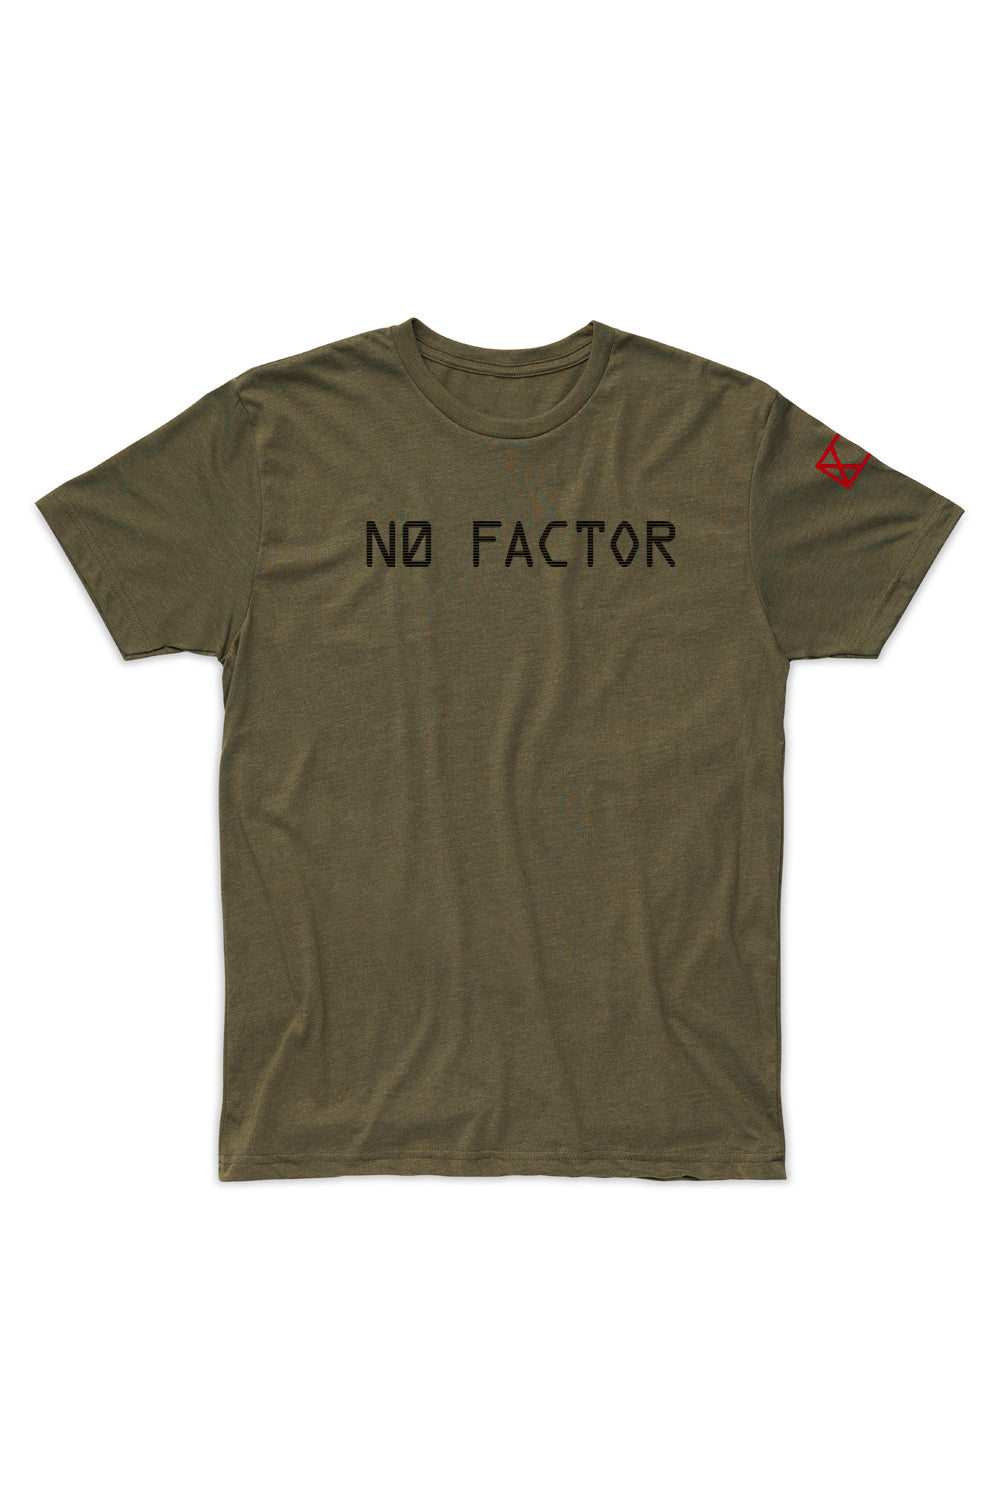 N0 Factor - Dec. '21